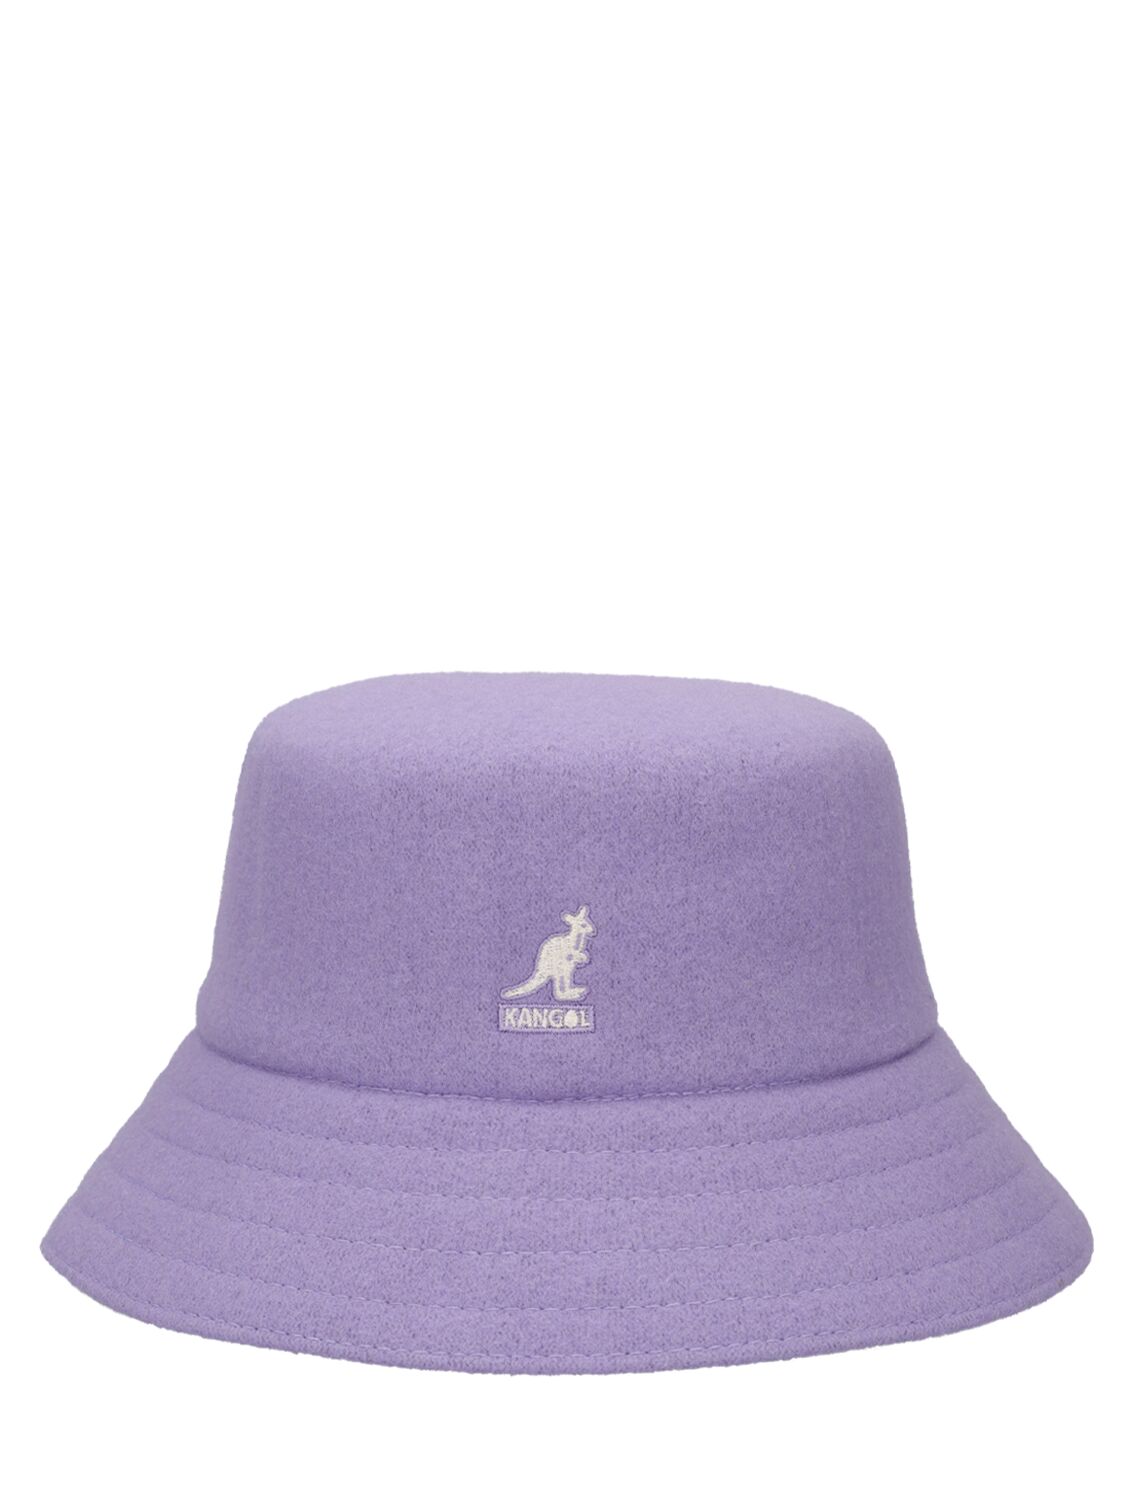 Kangol Lahinch Wool Blend Bucket Hat In Lilac